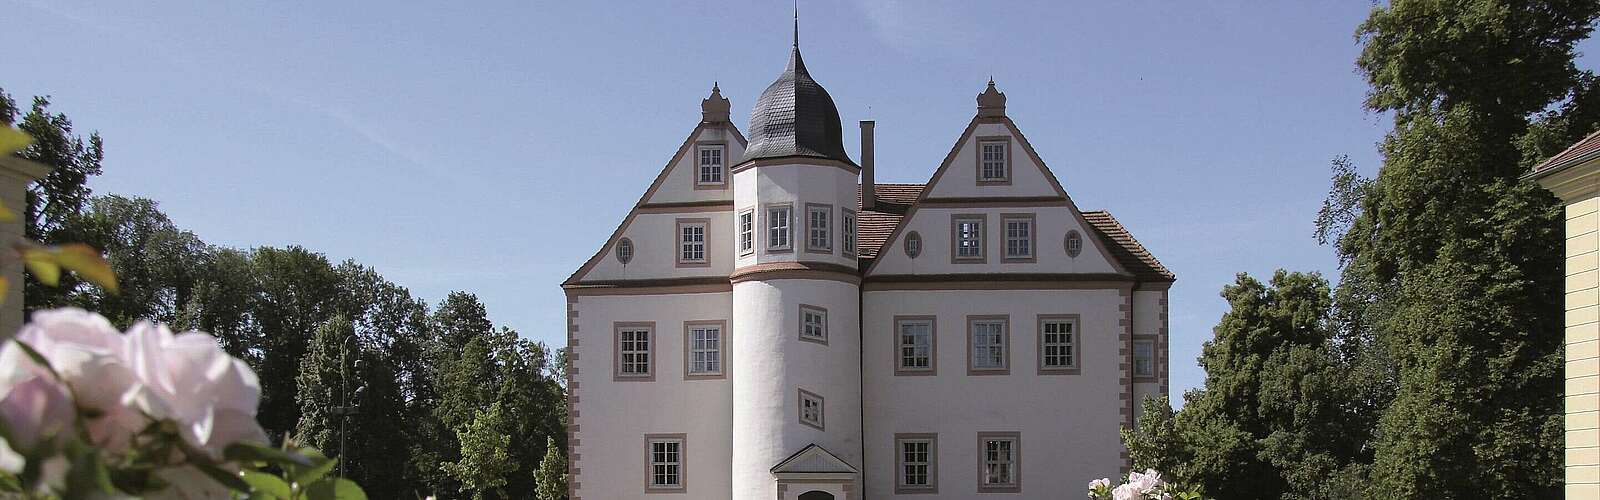 Schloss Königs Wusterhausen,
        
    

        Foto: Tourismusverband Dahme-Seenland e.V./Günter Schönfeld